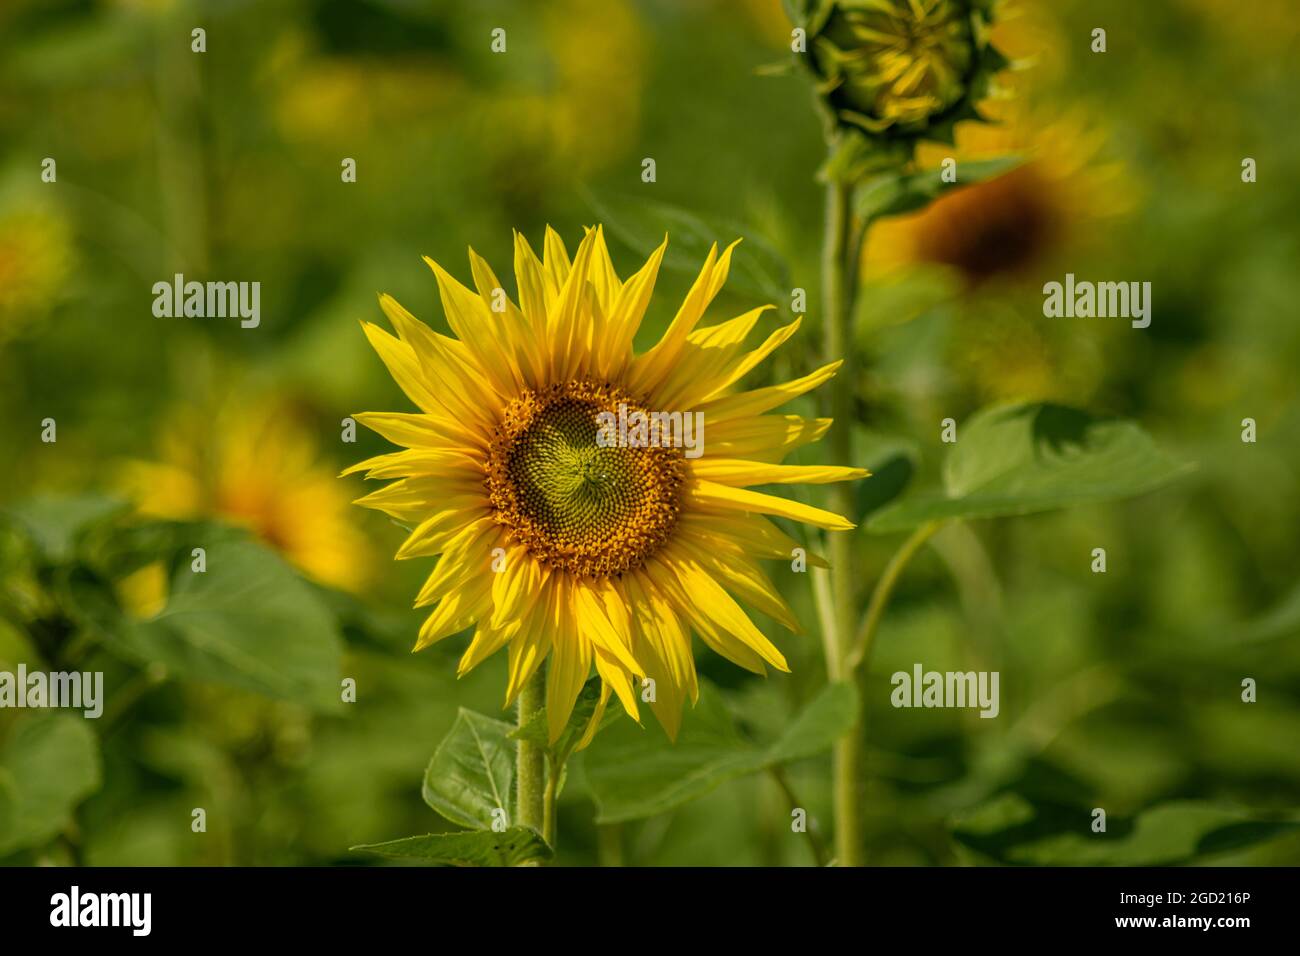 Flora : Field of sunflowers Stock Photo